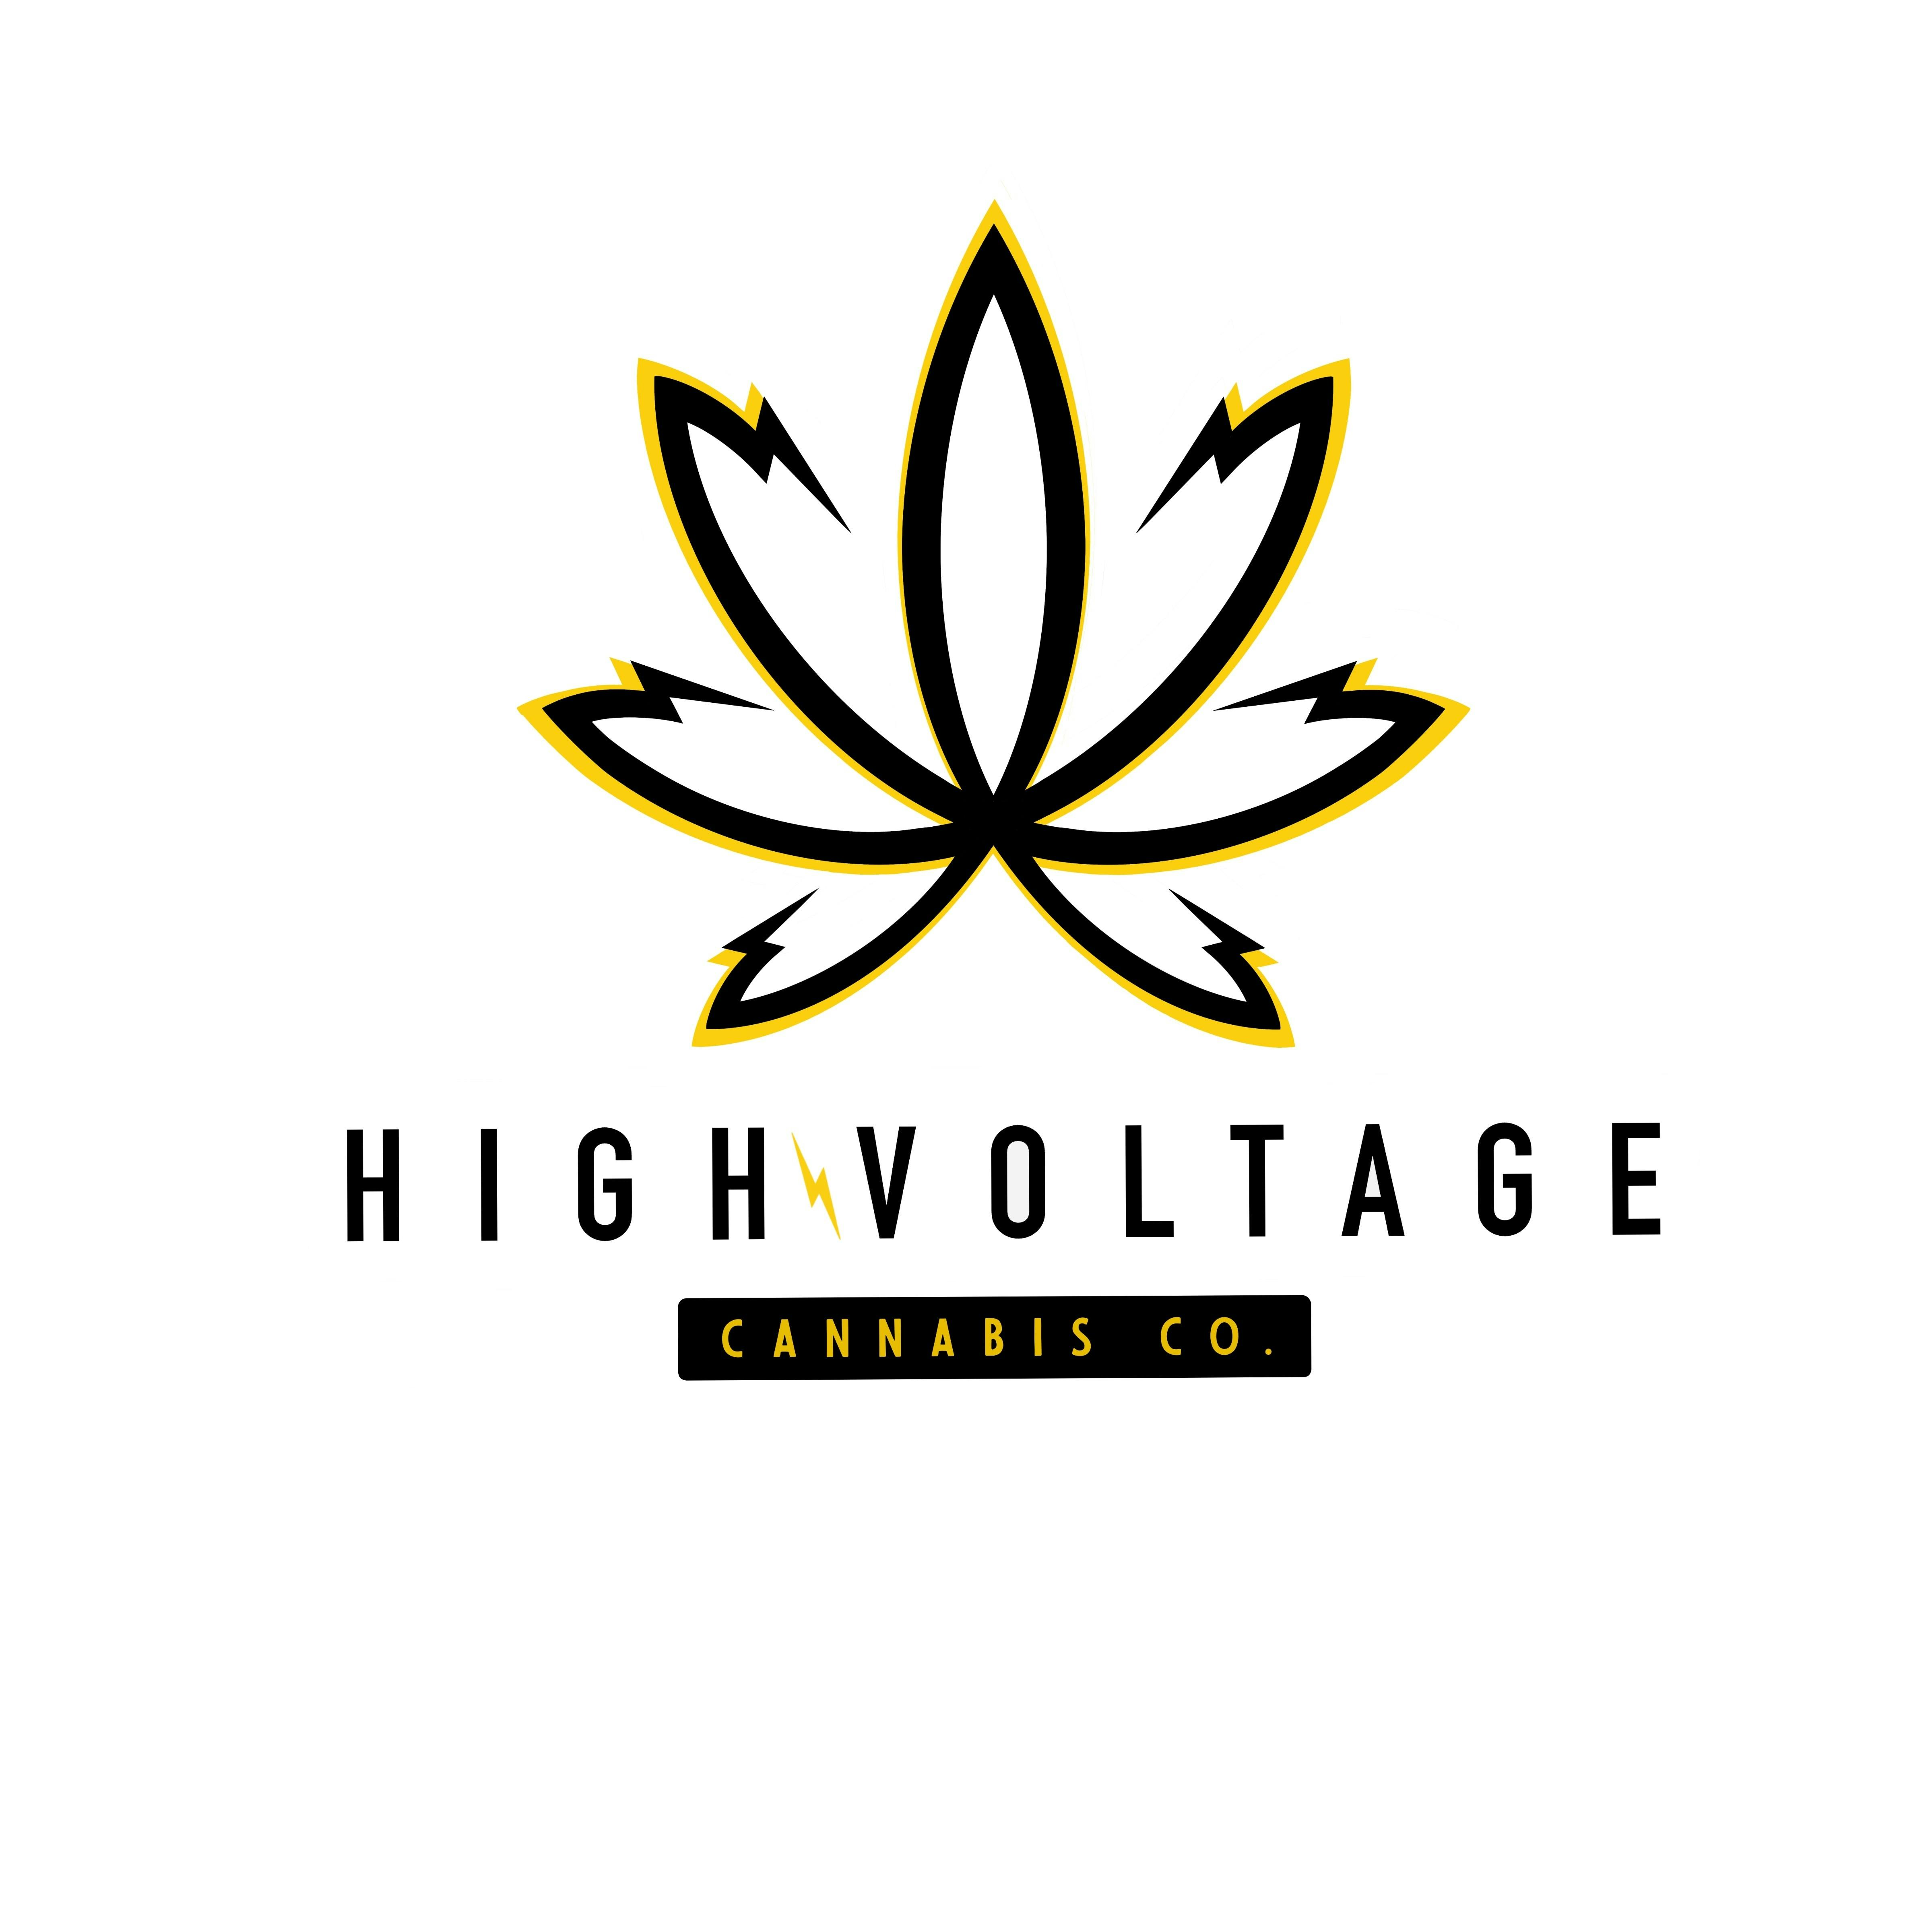 High Voltage Cannabis Co. logo